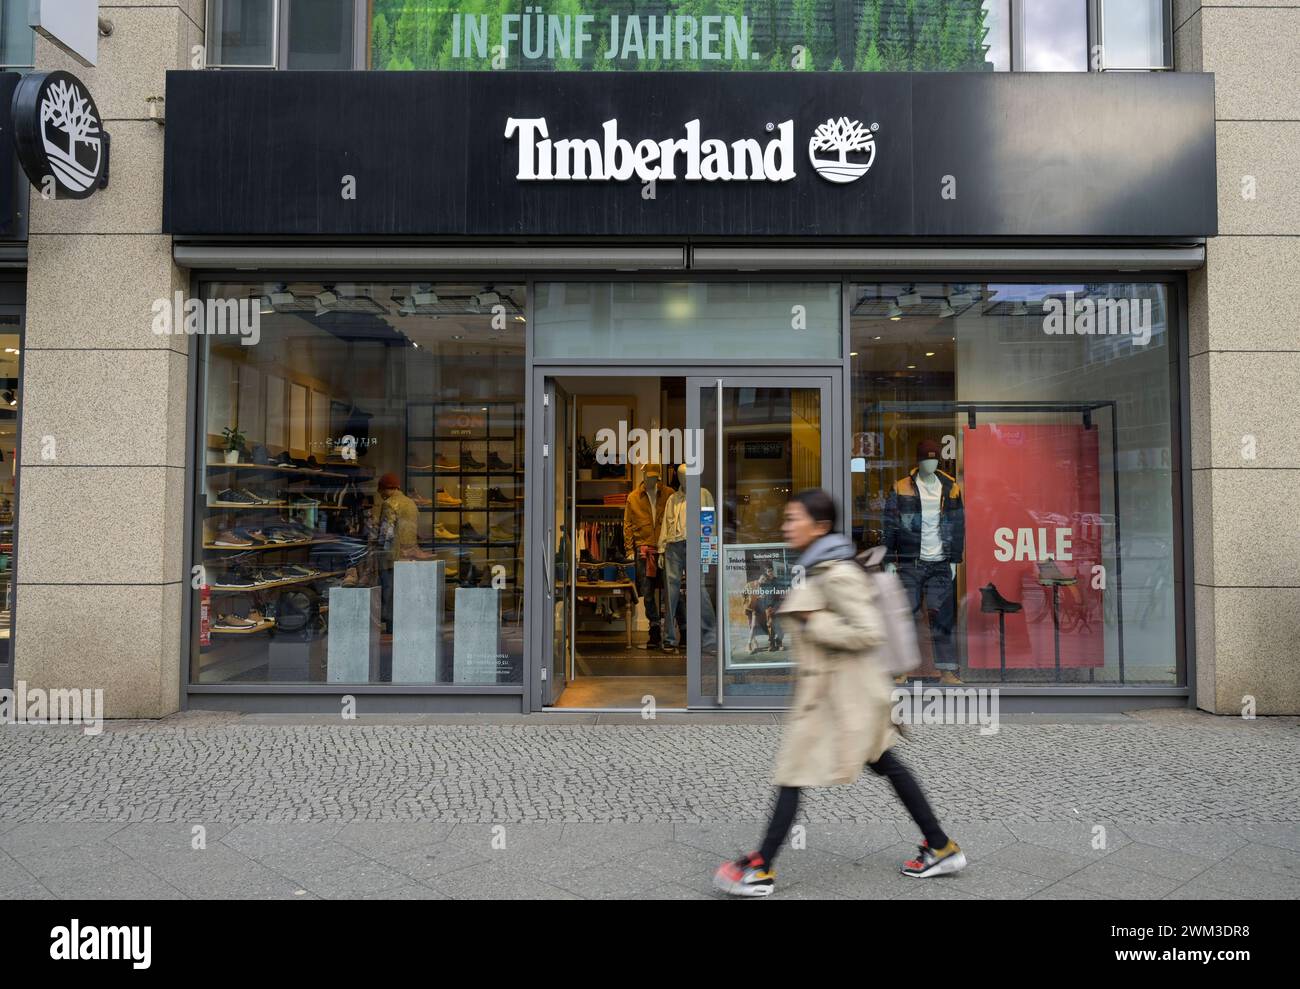 Timberland Schuhe Filiale, Friedrichstraße, Mitte, Berlin, Deutschland *** Timberland Shoes store, Friedrichstraße, Mitte, Berlin, Germany Stock Photo